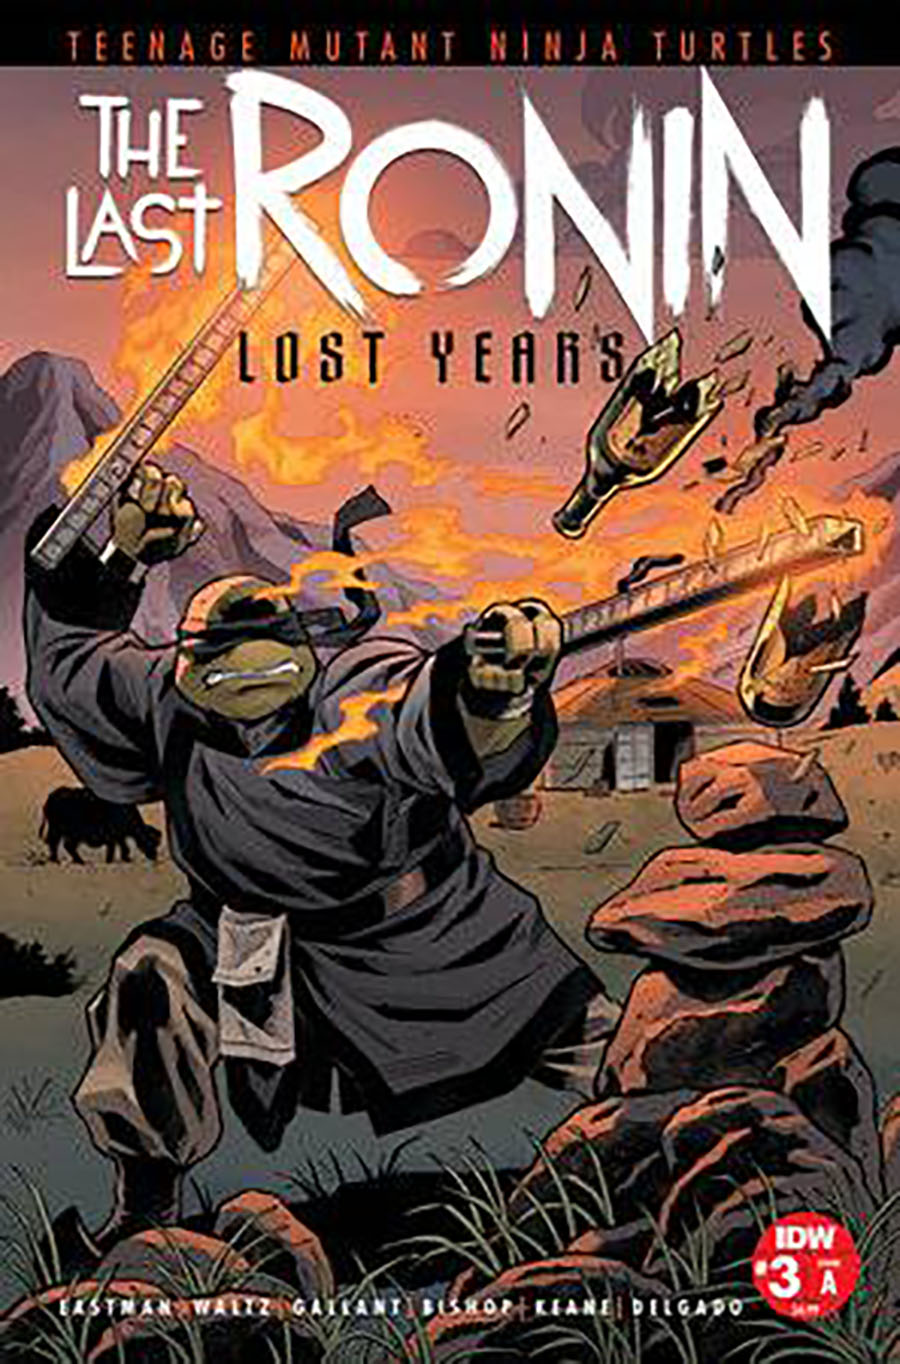 Teenage Mutant Ninja Turtles The Last Ronin The Lost Years #3 Cover A Regular SL Gallant Cover